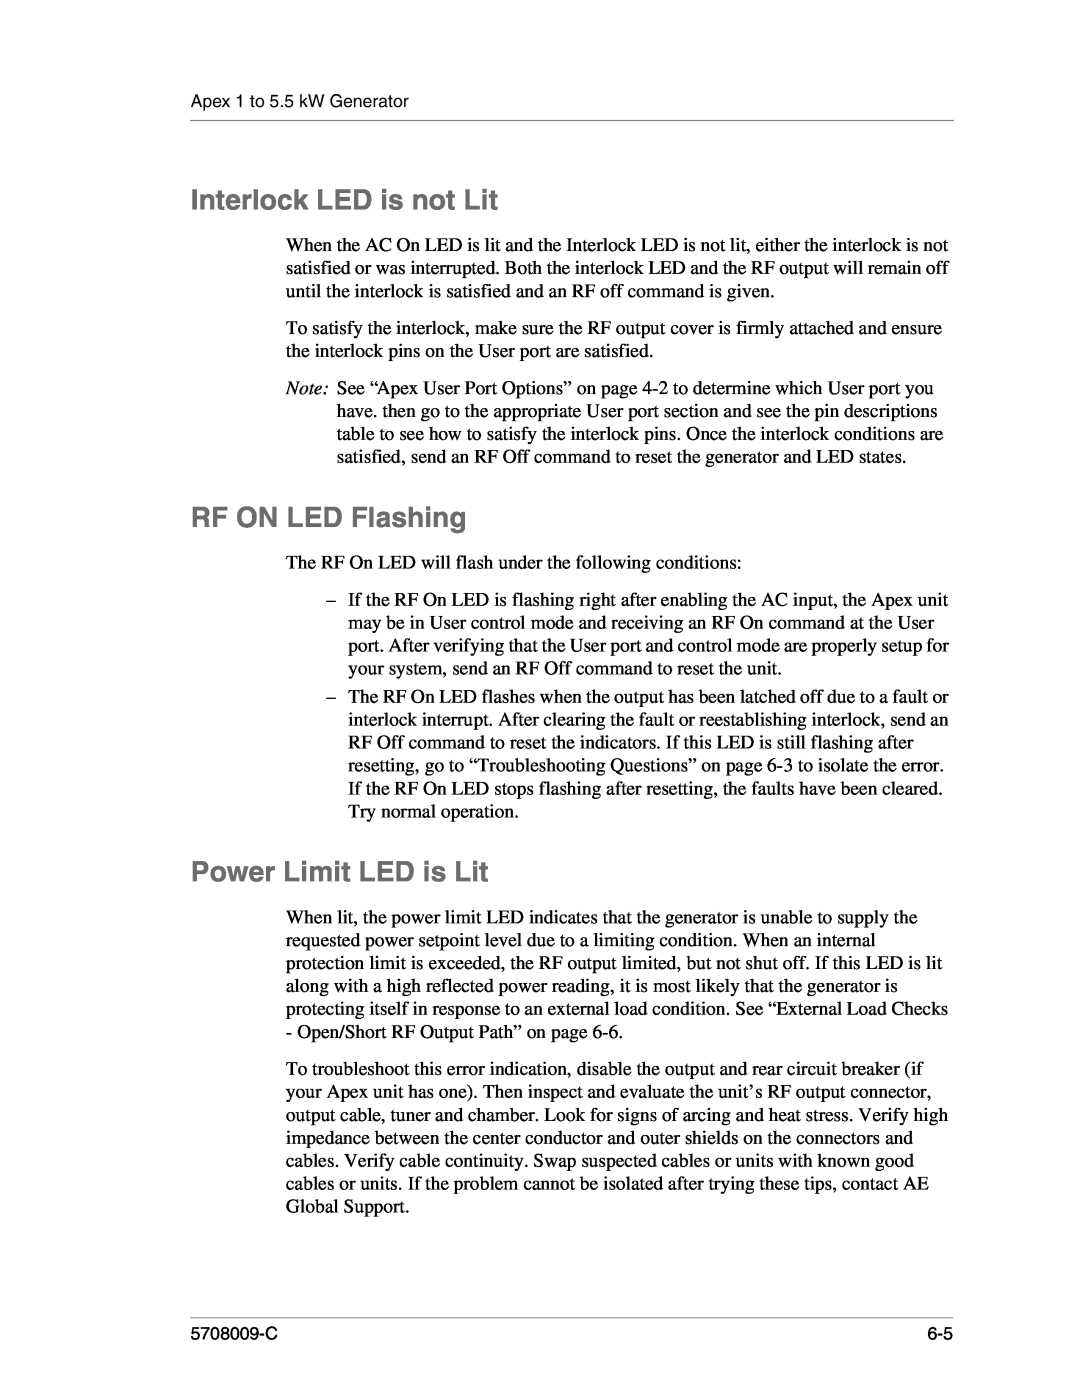 Apex Digital 5708009-C manual Interlock LED is not Lit, RF ON LED Flashing, Power Limit LED is Lit 